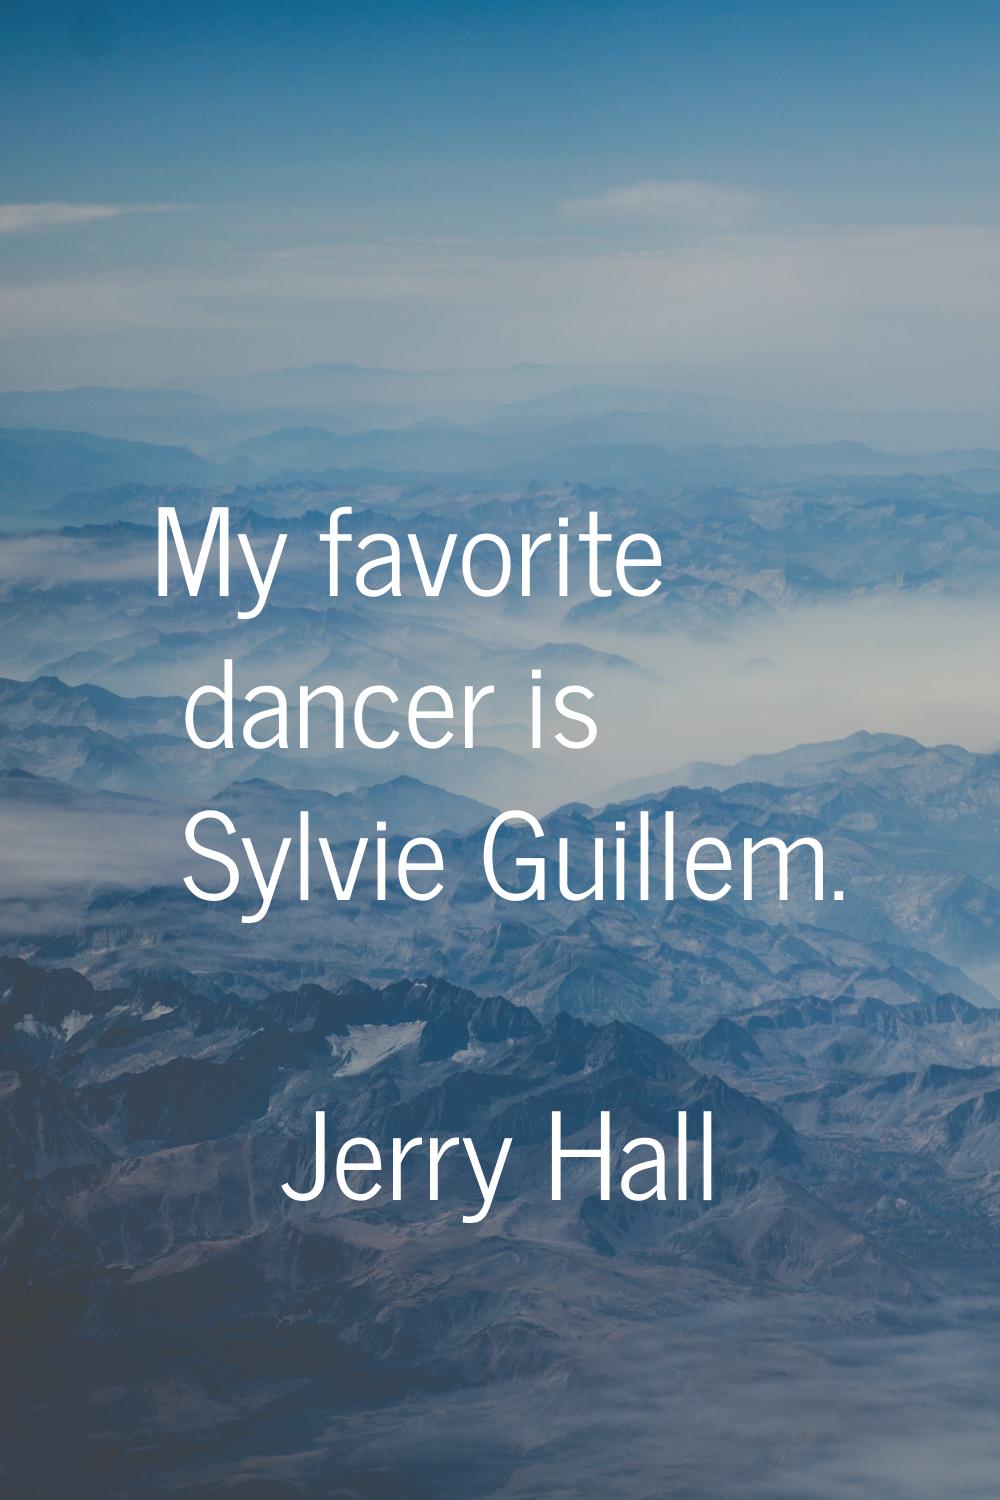 My favorite dancer is Sylvie Guillem.